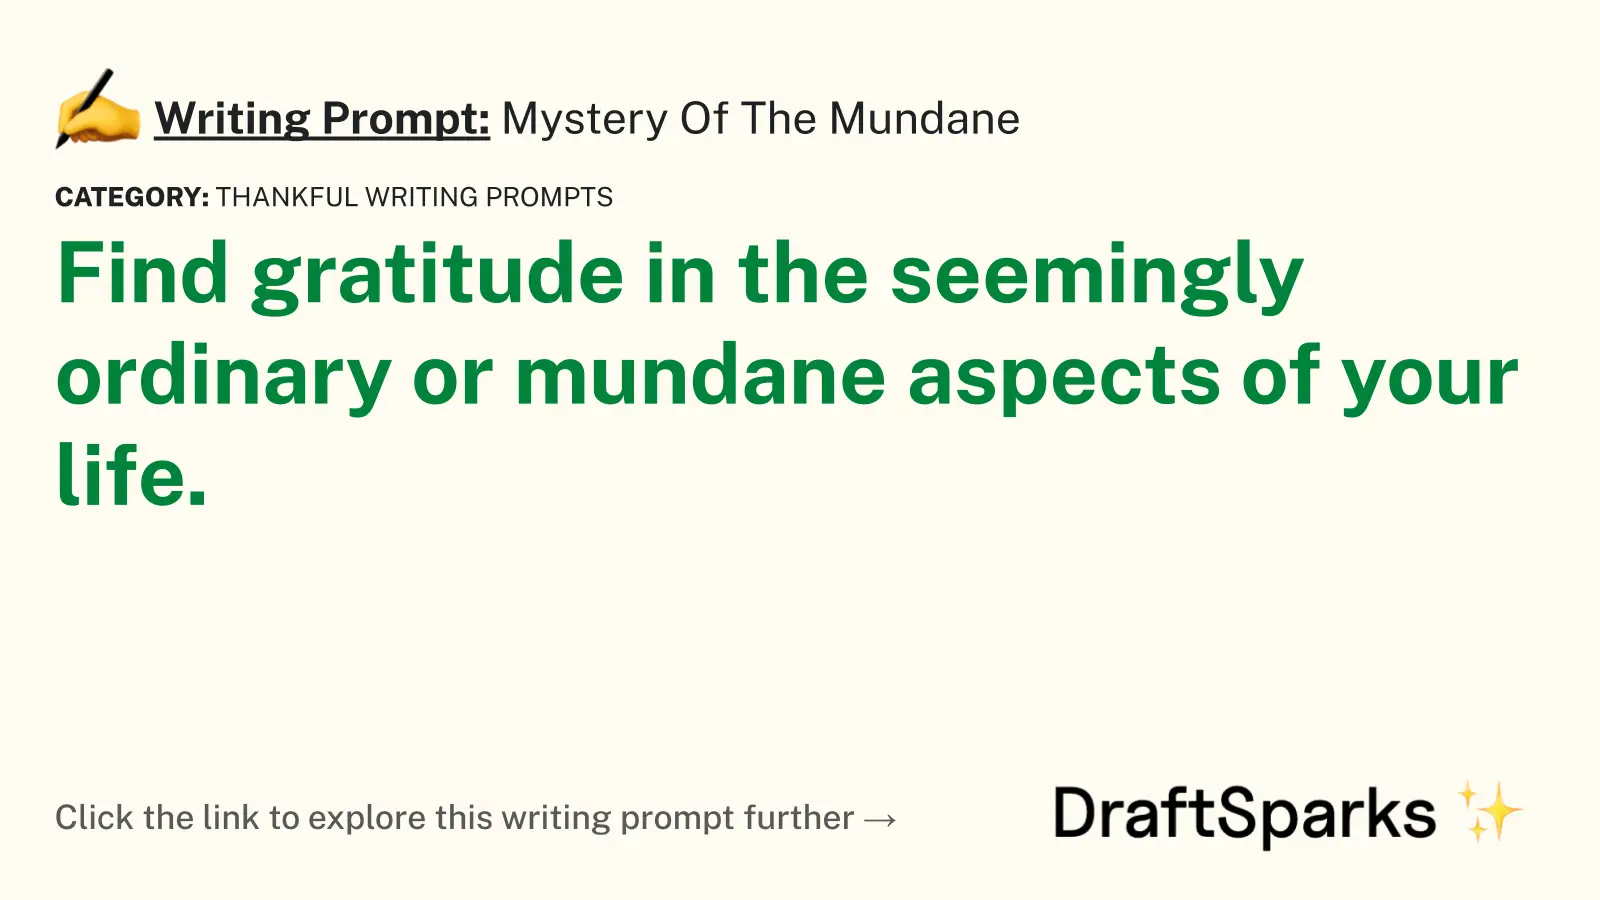 Mystery Of The Mundane